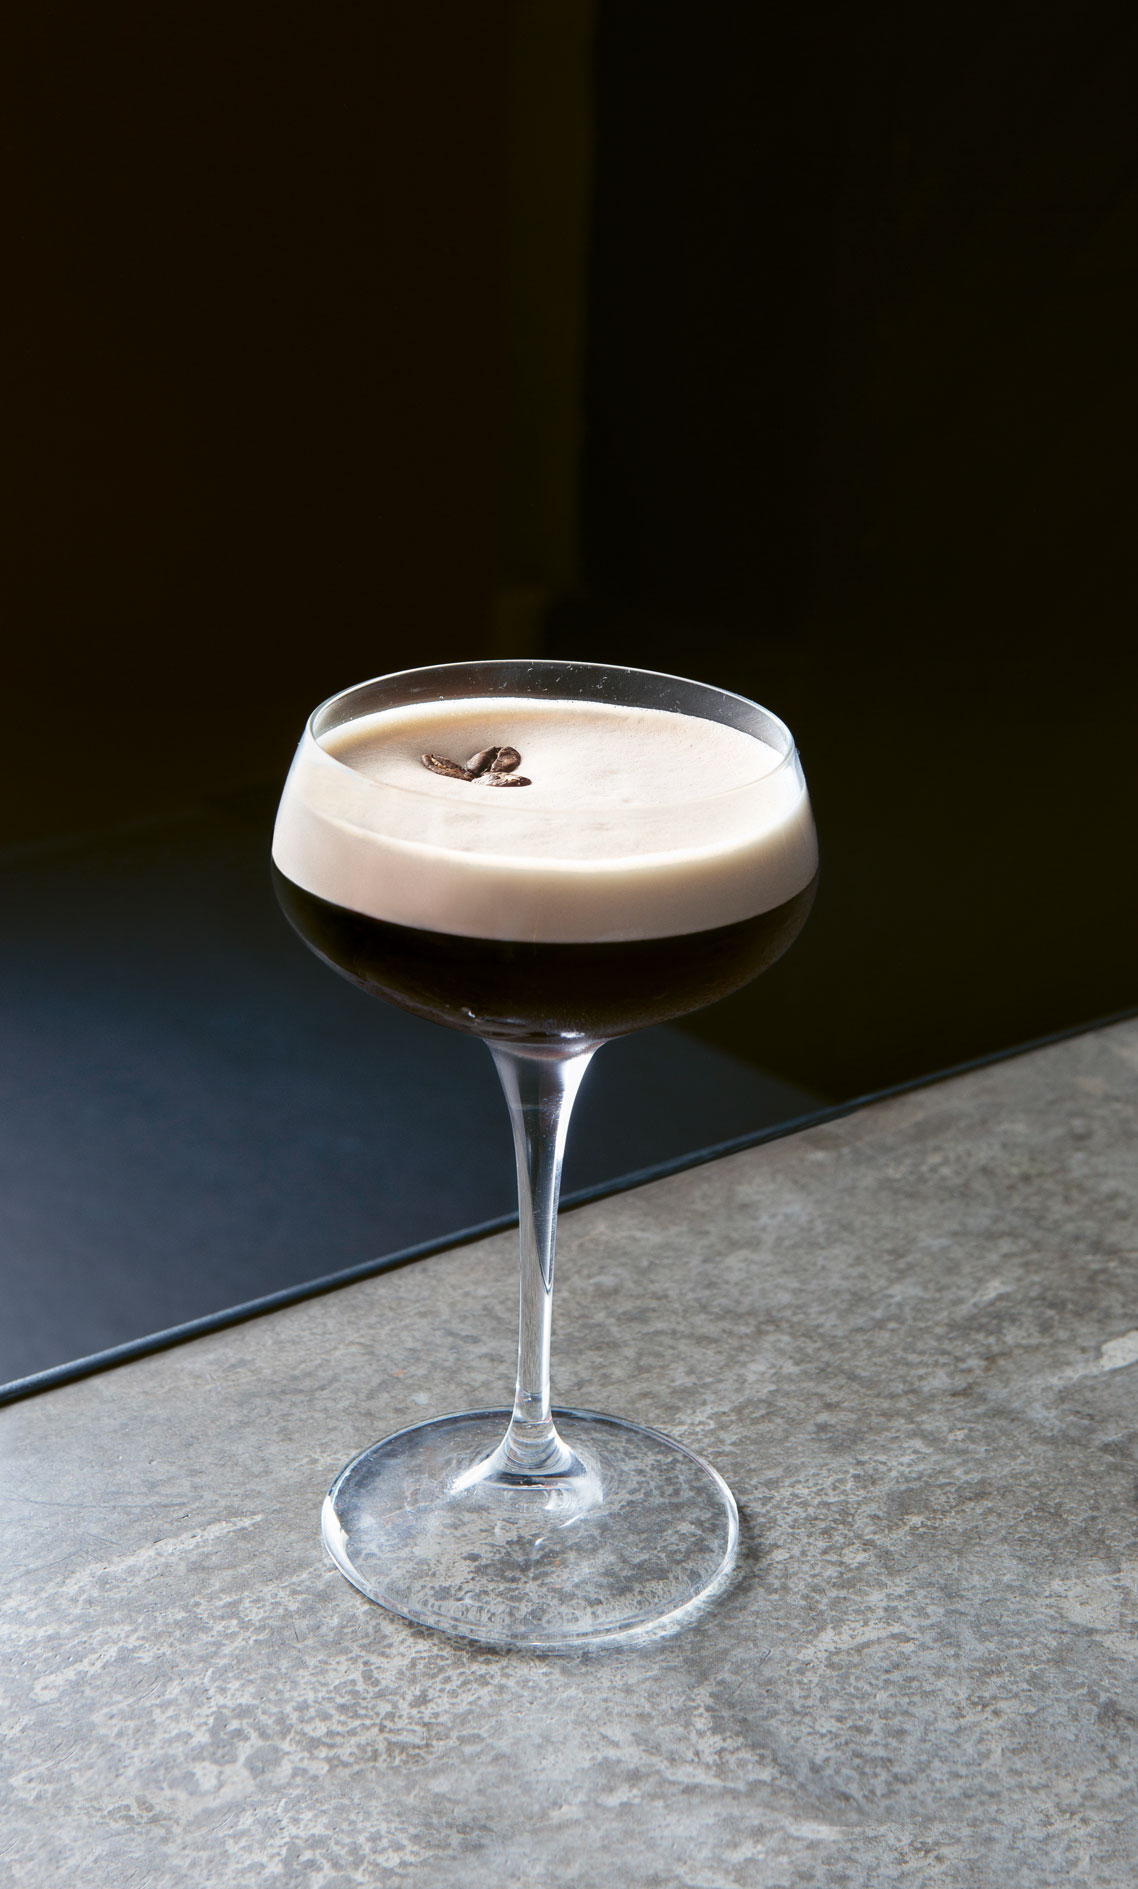 The Espresso Martini, as featured in Spirited